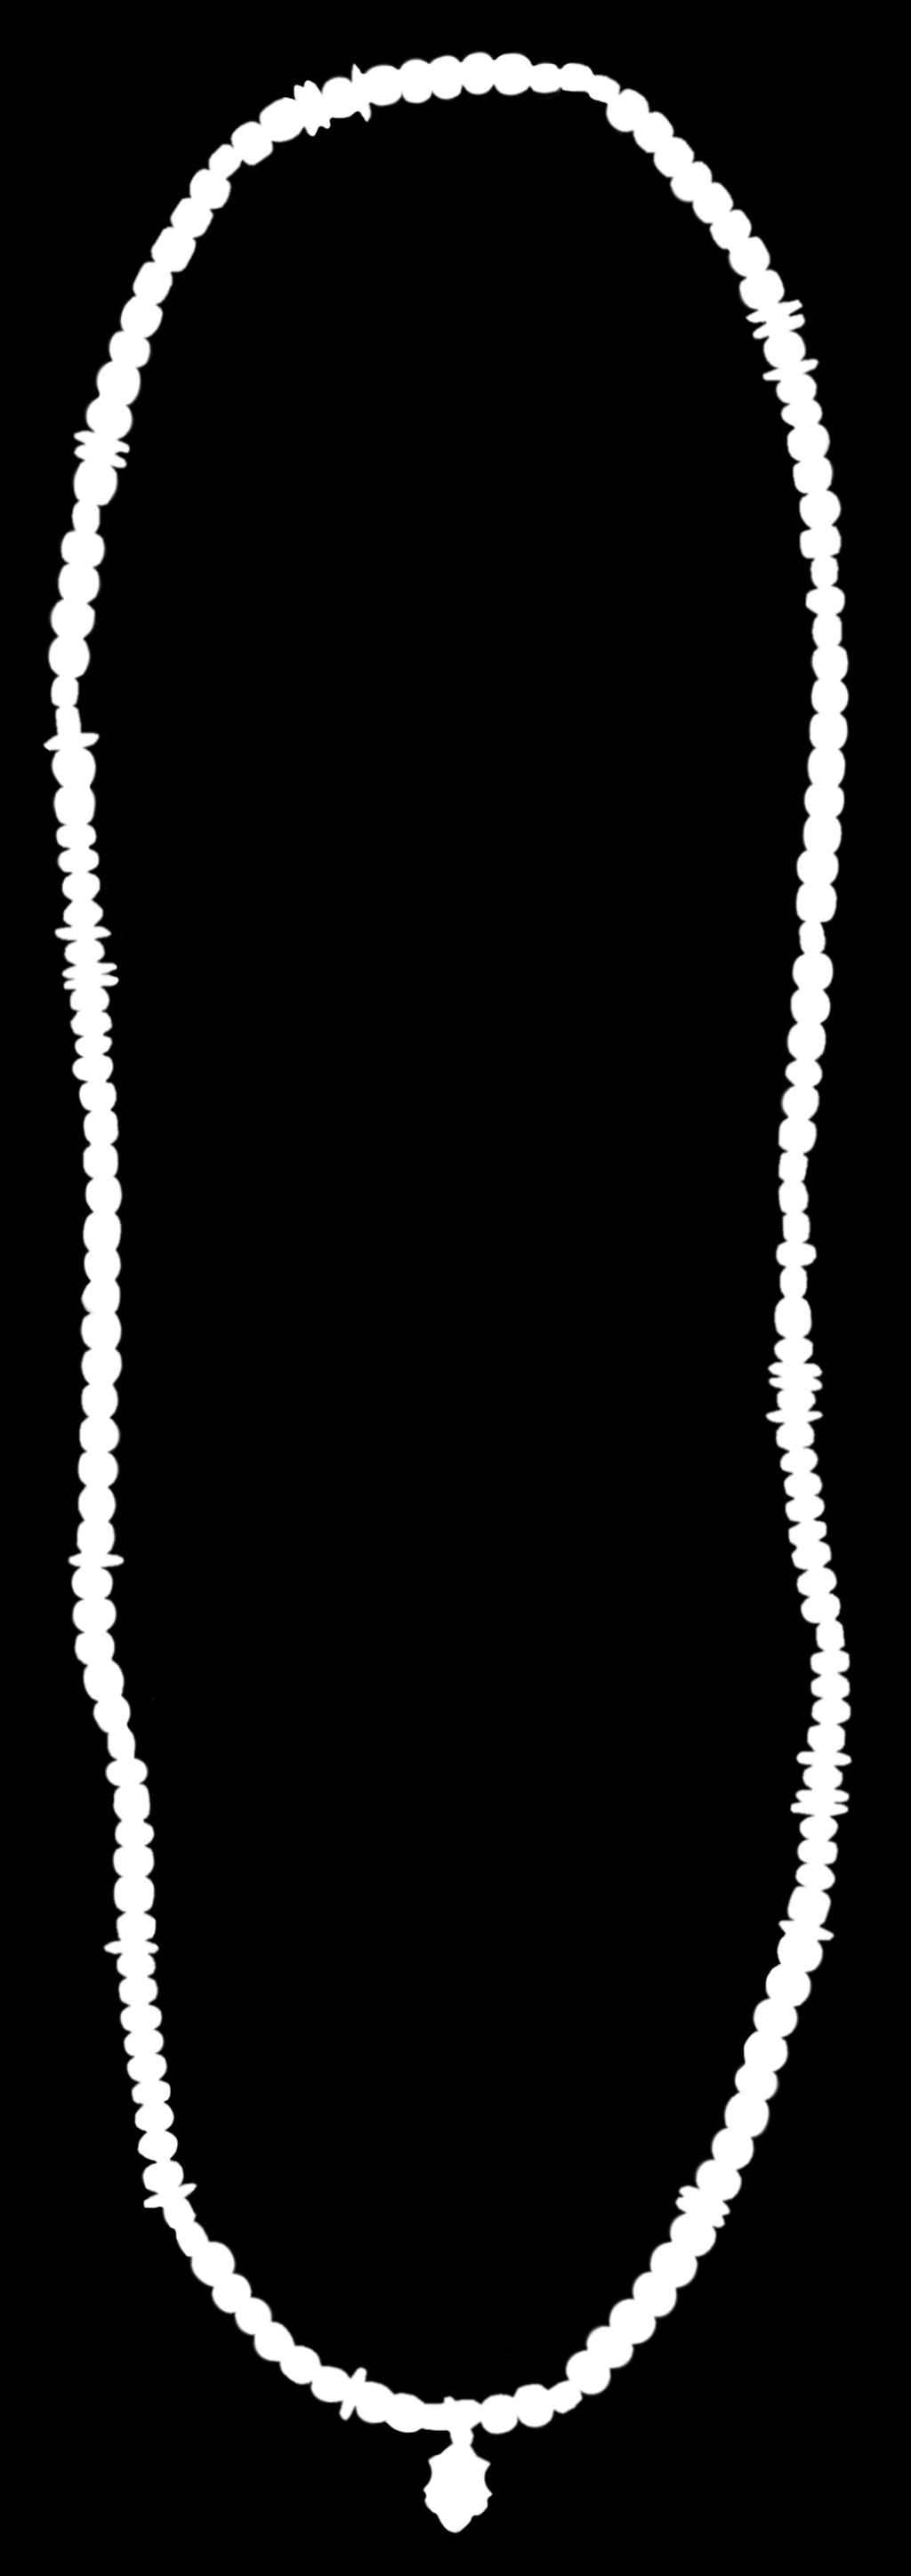 17AHK-410 Round White Bone Bracelet - Turquoise - 17AHK-411 Round White Bone Bracelet - Onyx - Charm:Silver Beads:Bone,Turquoise & Brass Size:19cm / U.S.A. Muslin Pouch Charm:Silver Beads:Bone,Onyx & Brass Size:19cm / U.